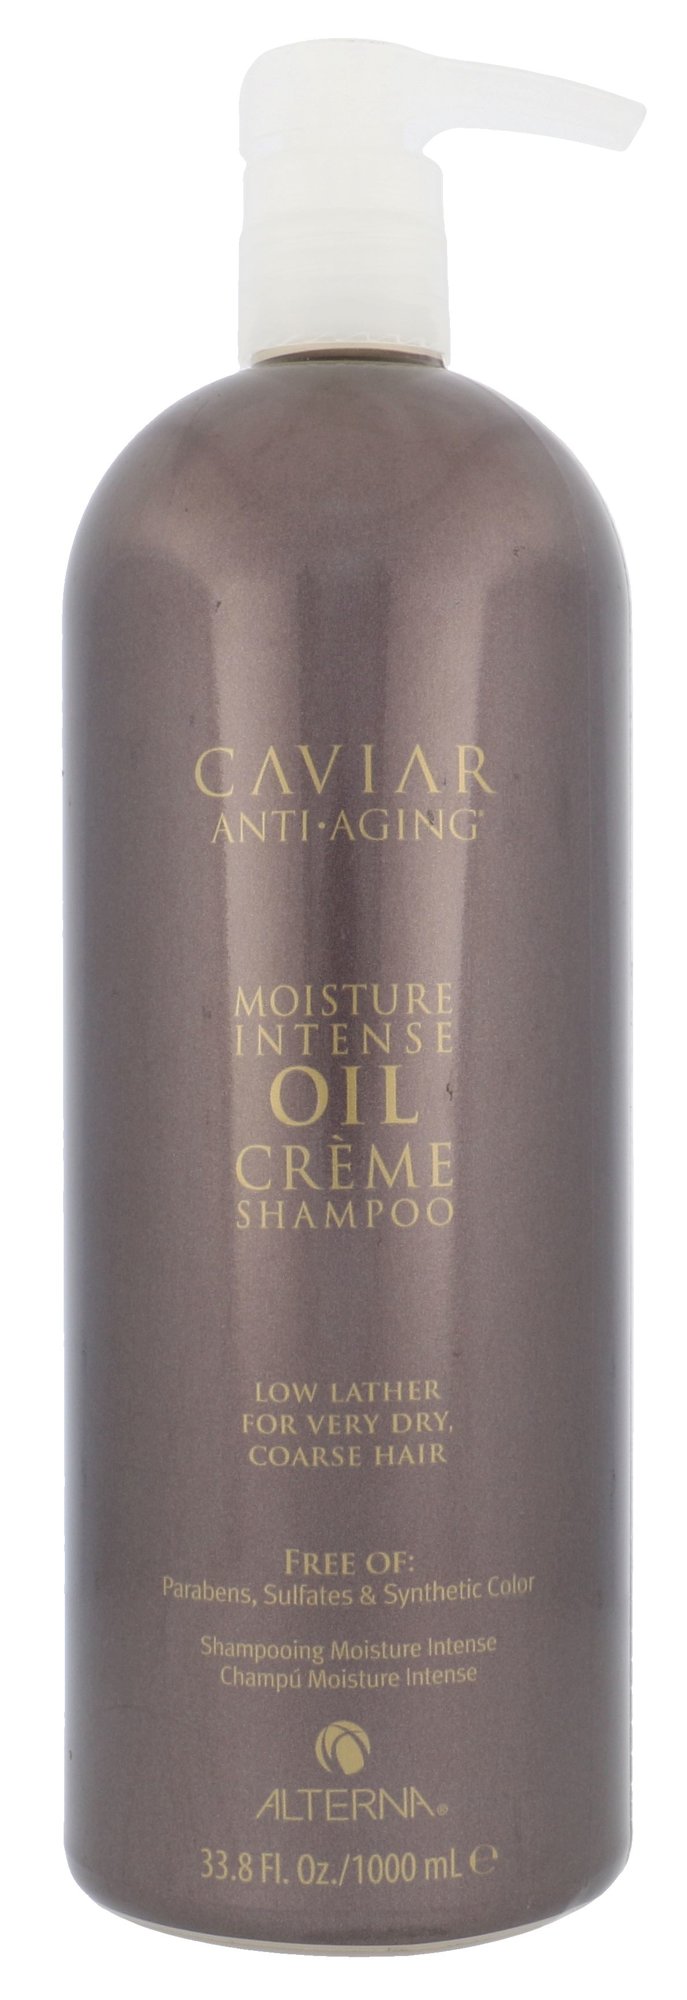 Alterna Caviar Moisture Intense Oil Creme Shampoo